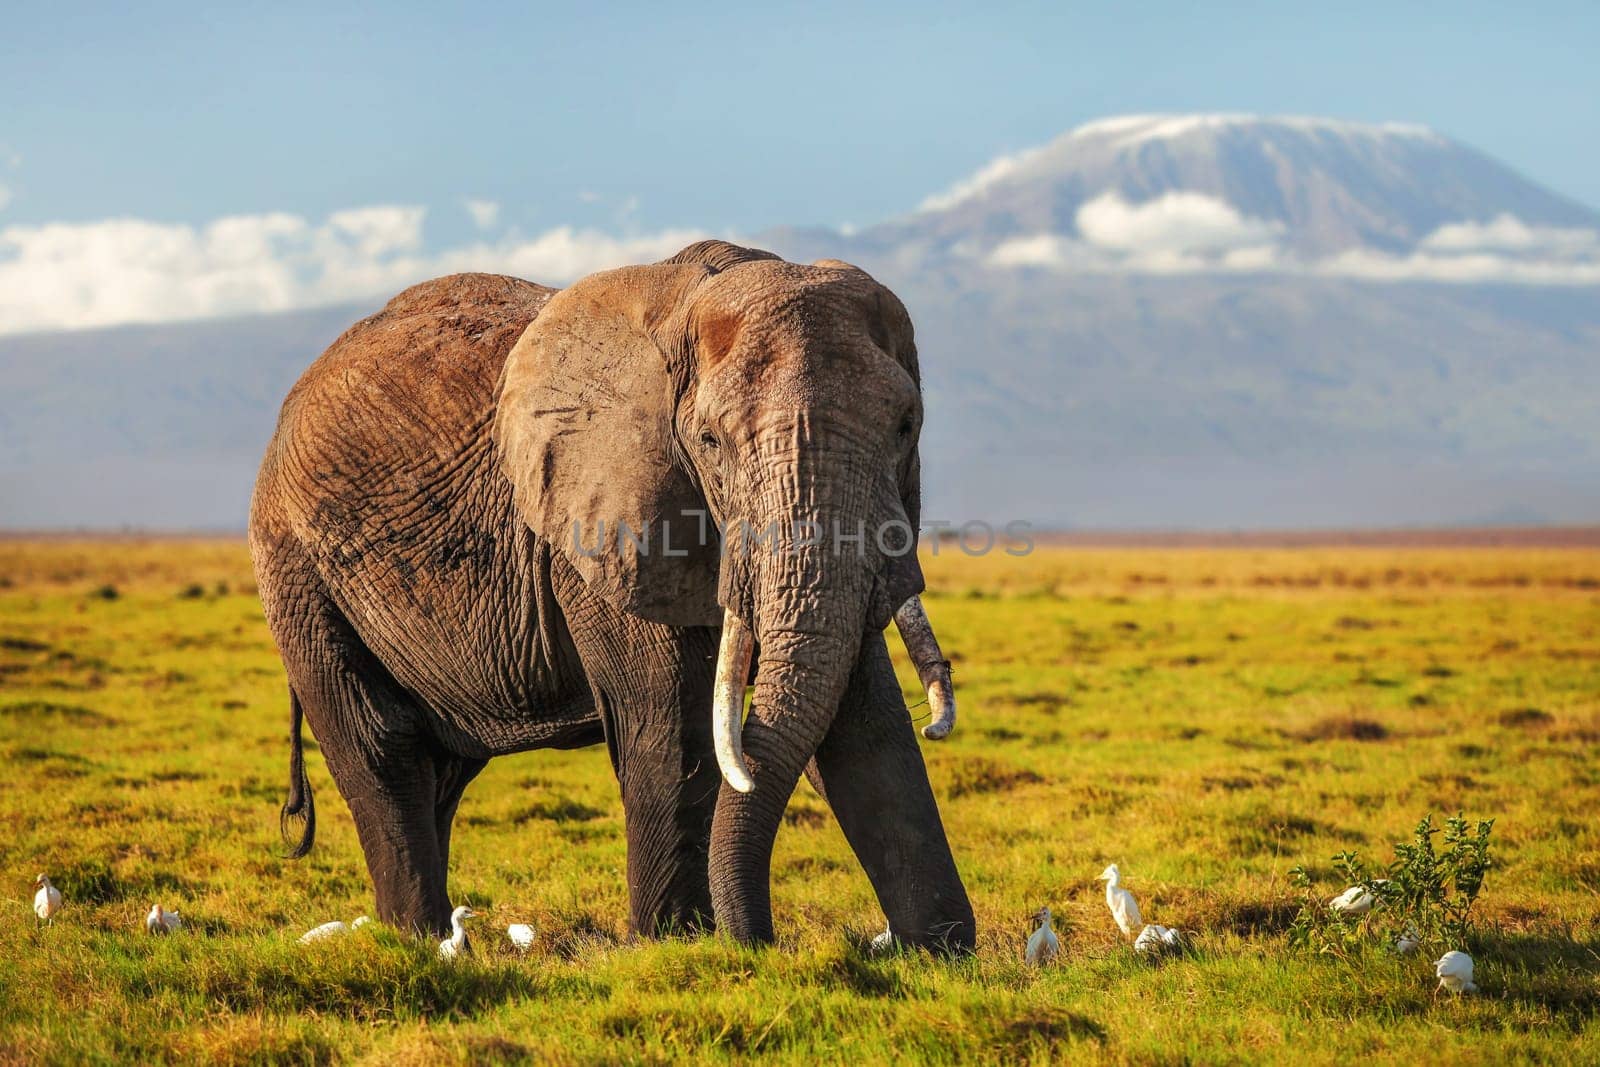 African bush elephant (Loxodonta africana) in low grass, white heron birds at feet, mount Kilimanjaro in background. by Ivanko